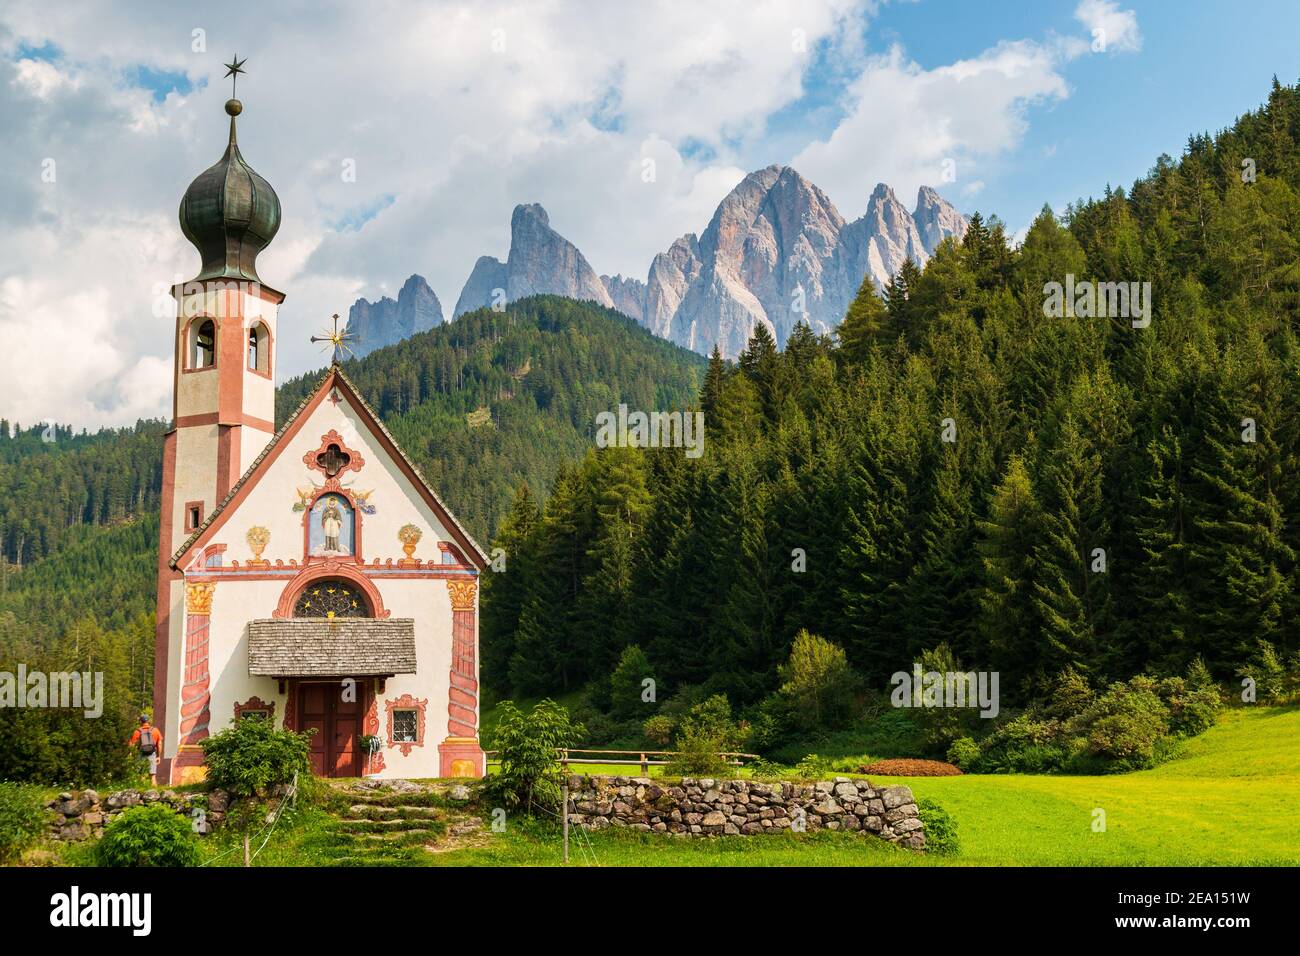 The world famous church in the prairie, San Giovanni in Ranui in Santa Maddalena of the Funes Valley, Trentino Alto Adige, Italy Stock Photo